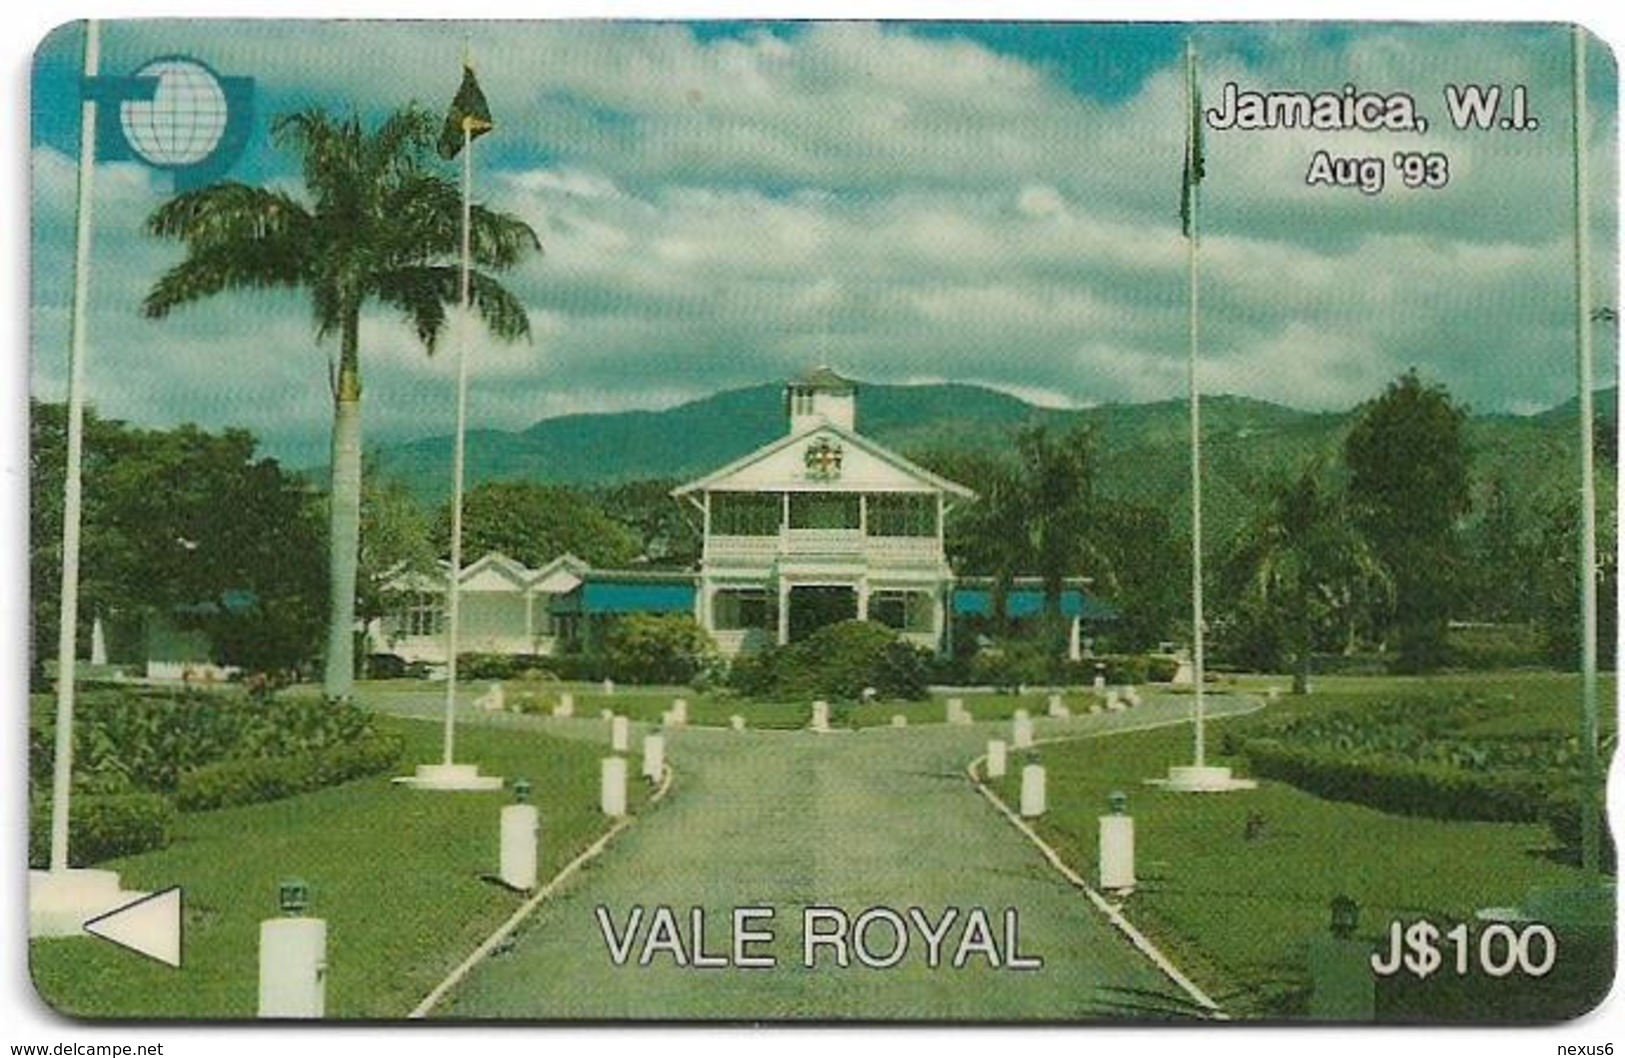 Jamaica - C&W - Vale Royal, 15JAMA, 100J$, 1993, Used - Jamaica